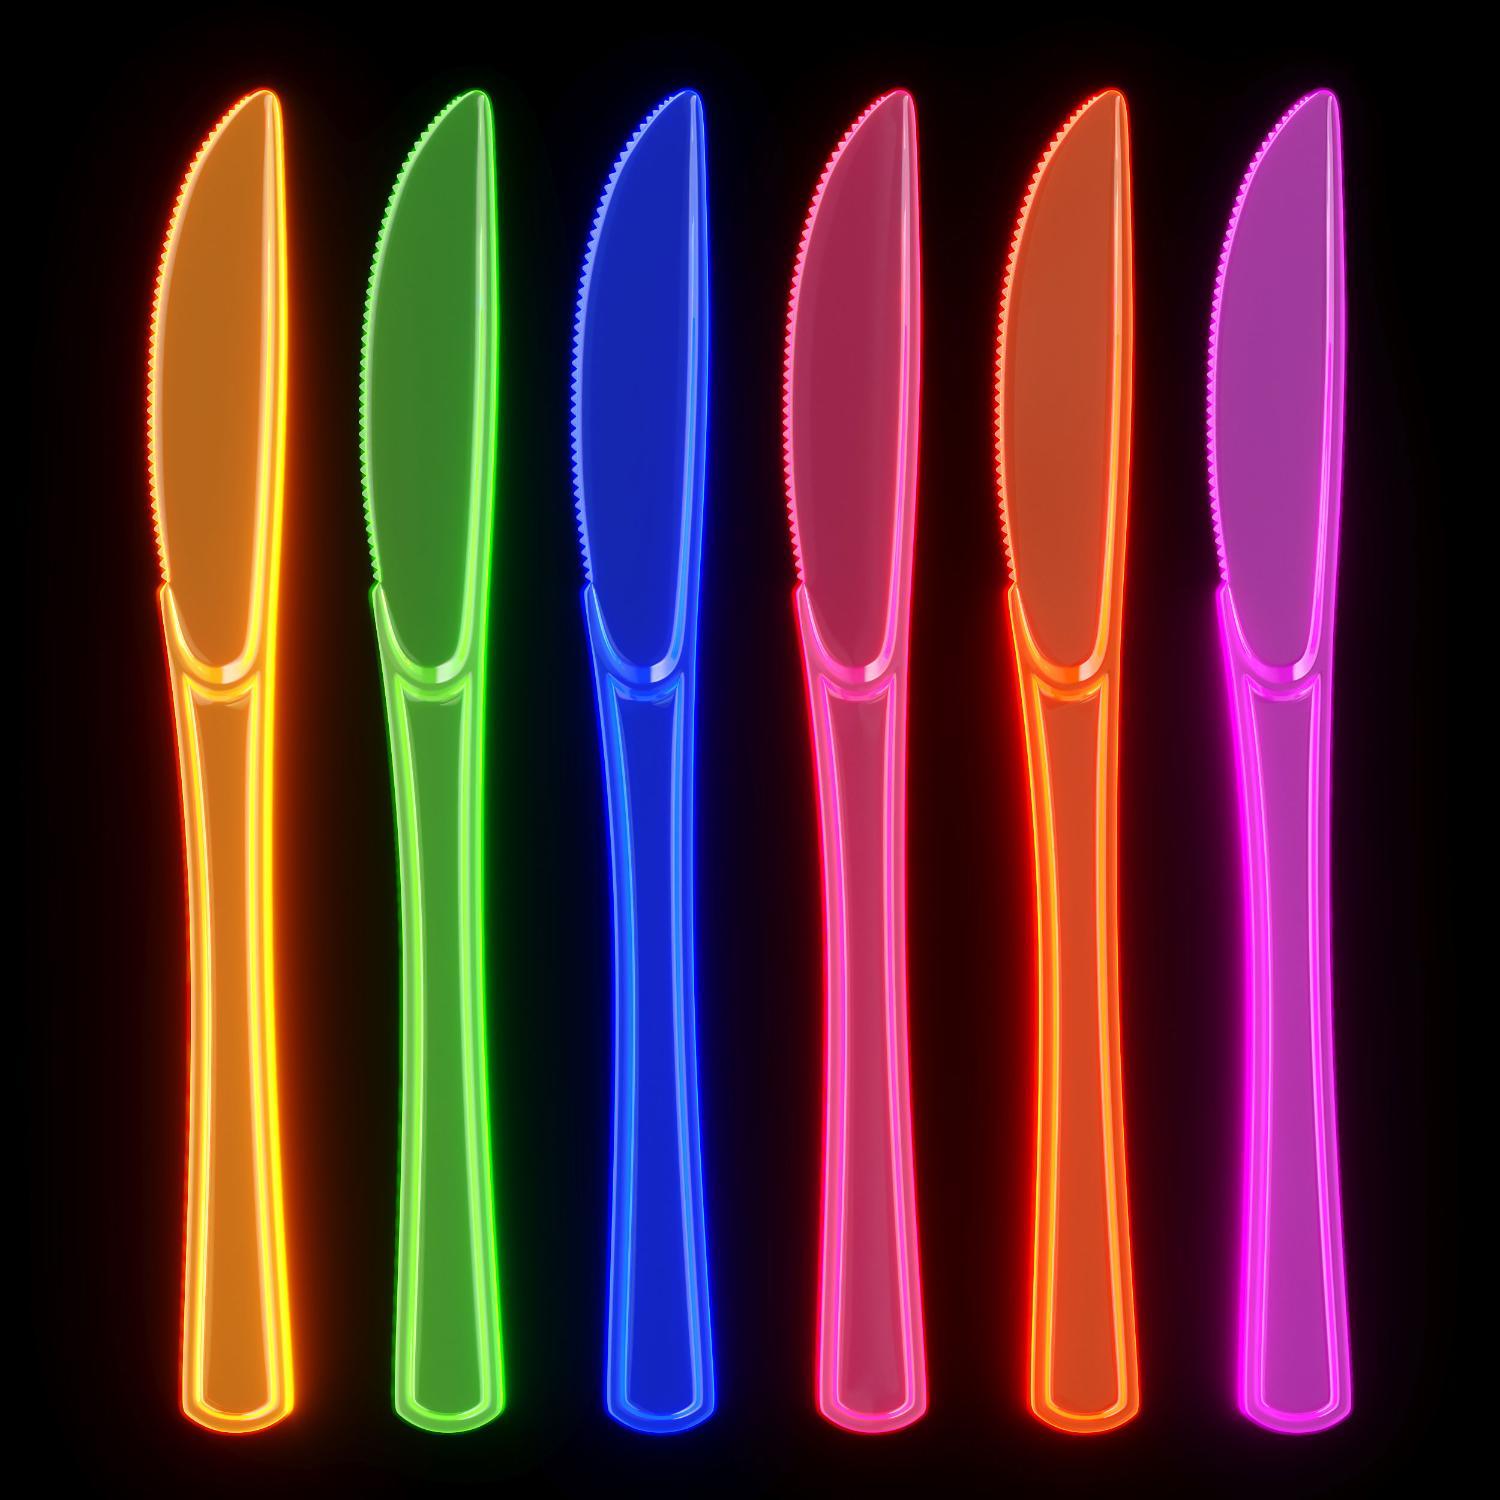 Heavy Duty Neon Plastic Knives - 1440 ct.